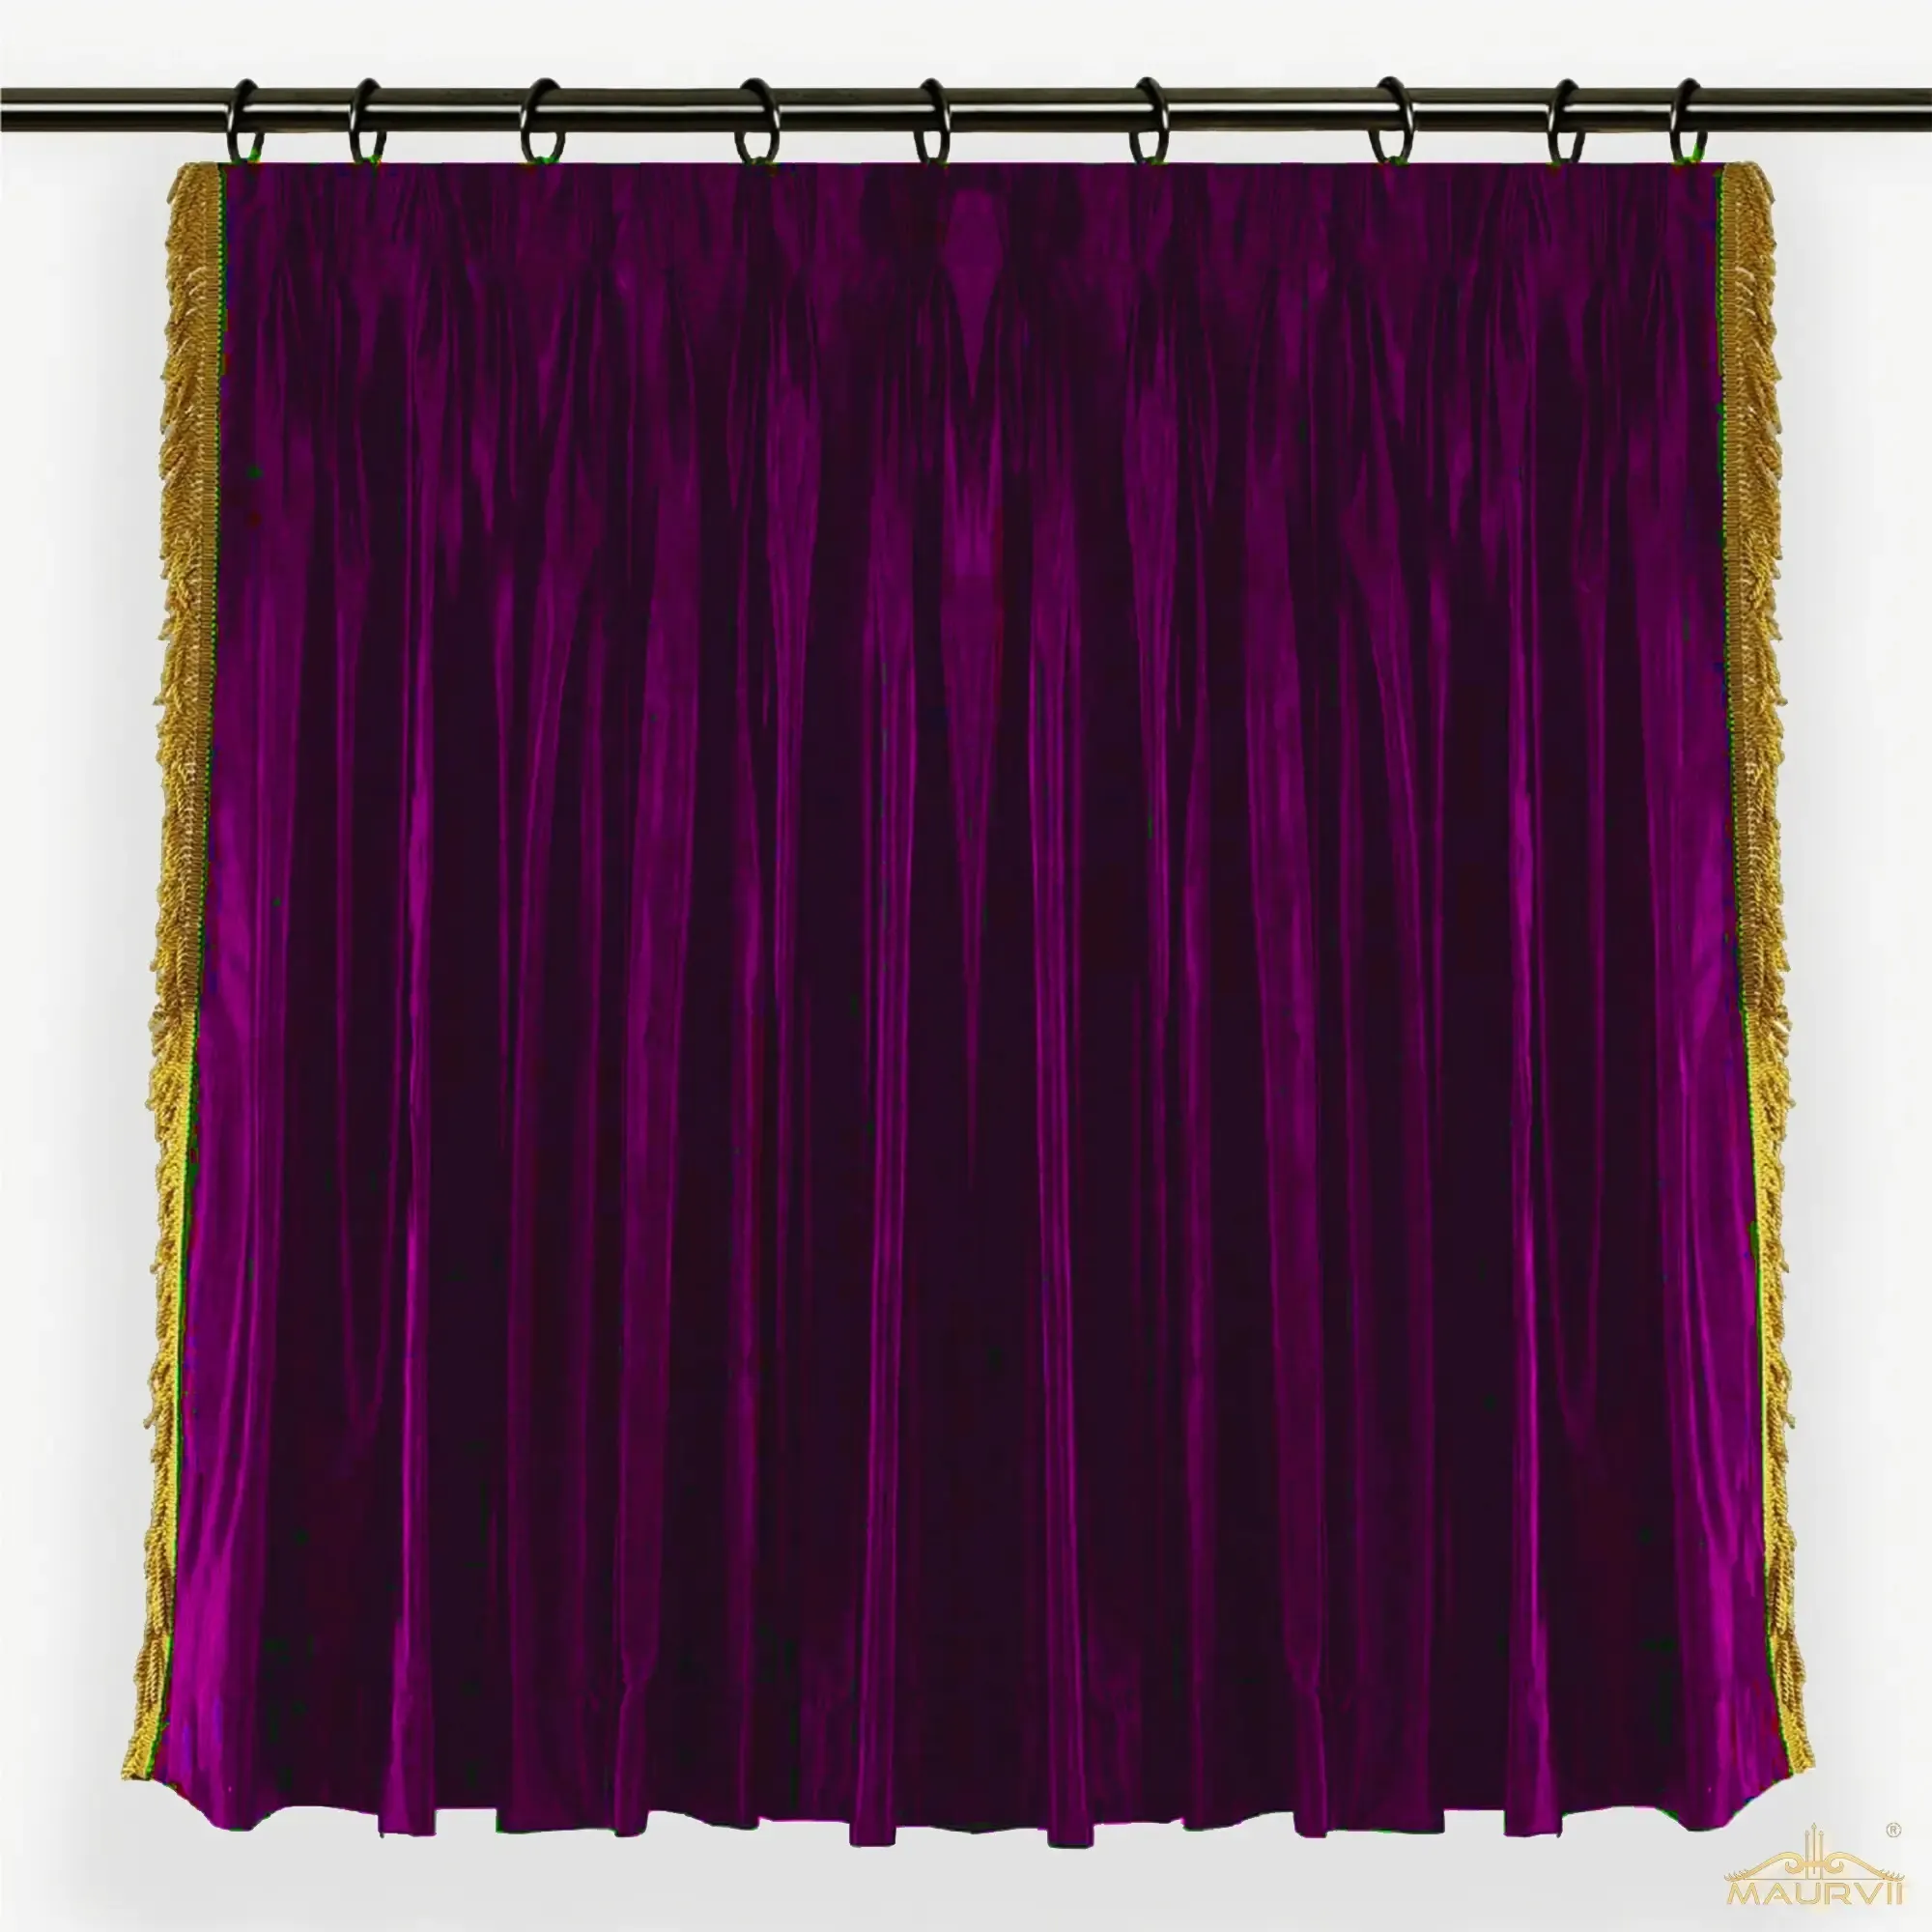 Plum curtains with fringe